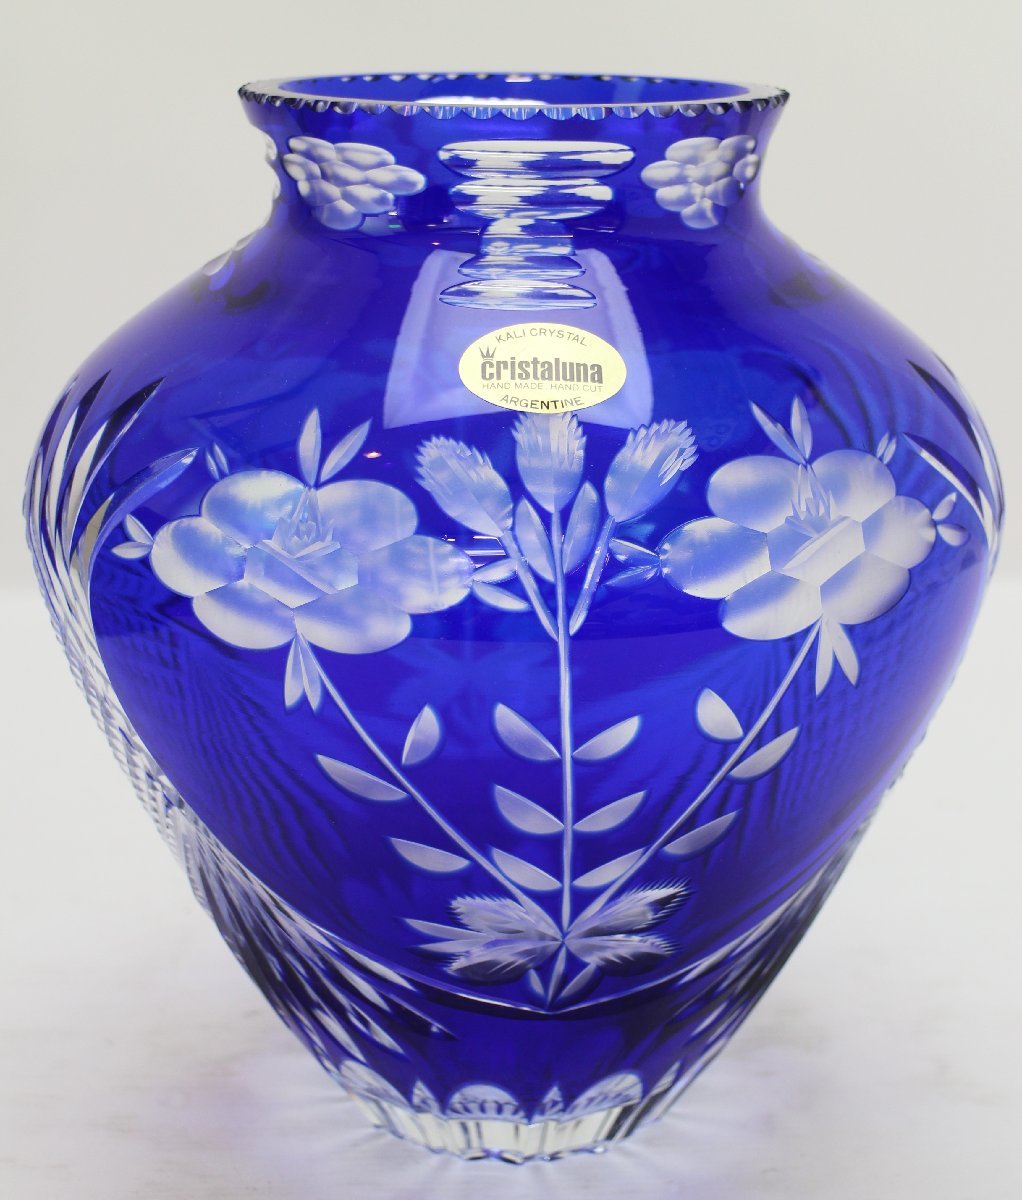  unused storage goods cristaluna s.a. cut glass vase Argentina hand made hand cut flower vase ornament 